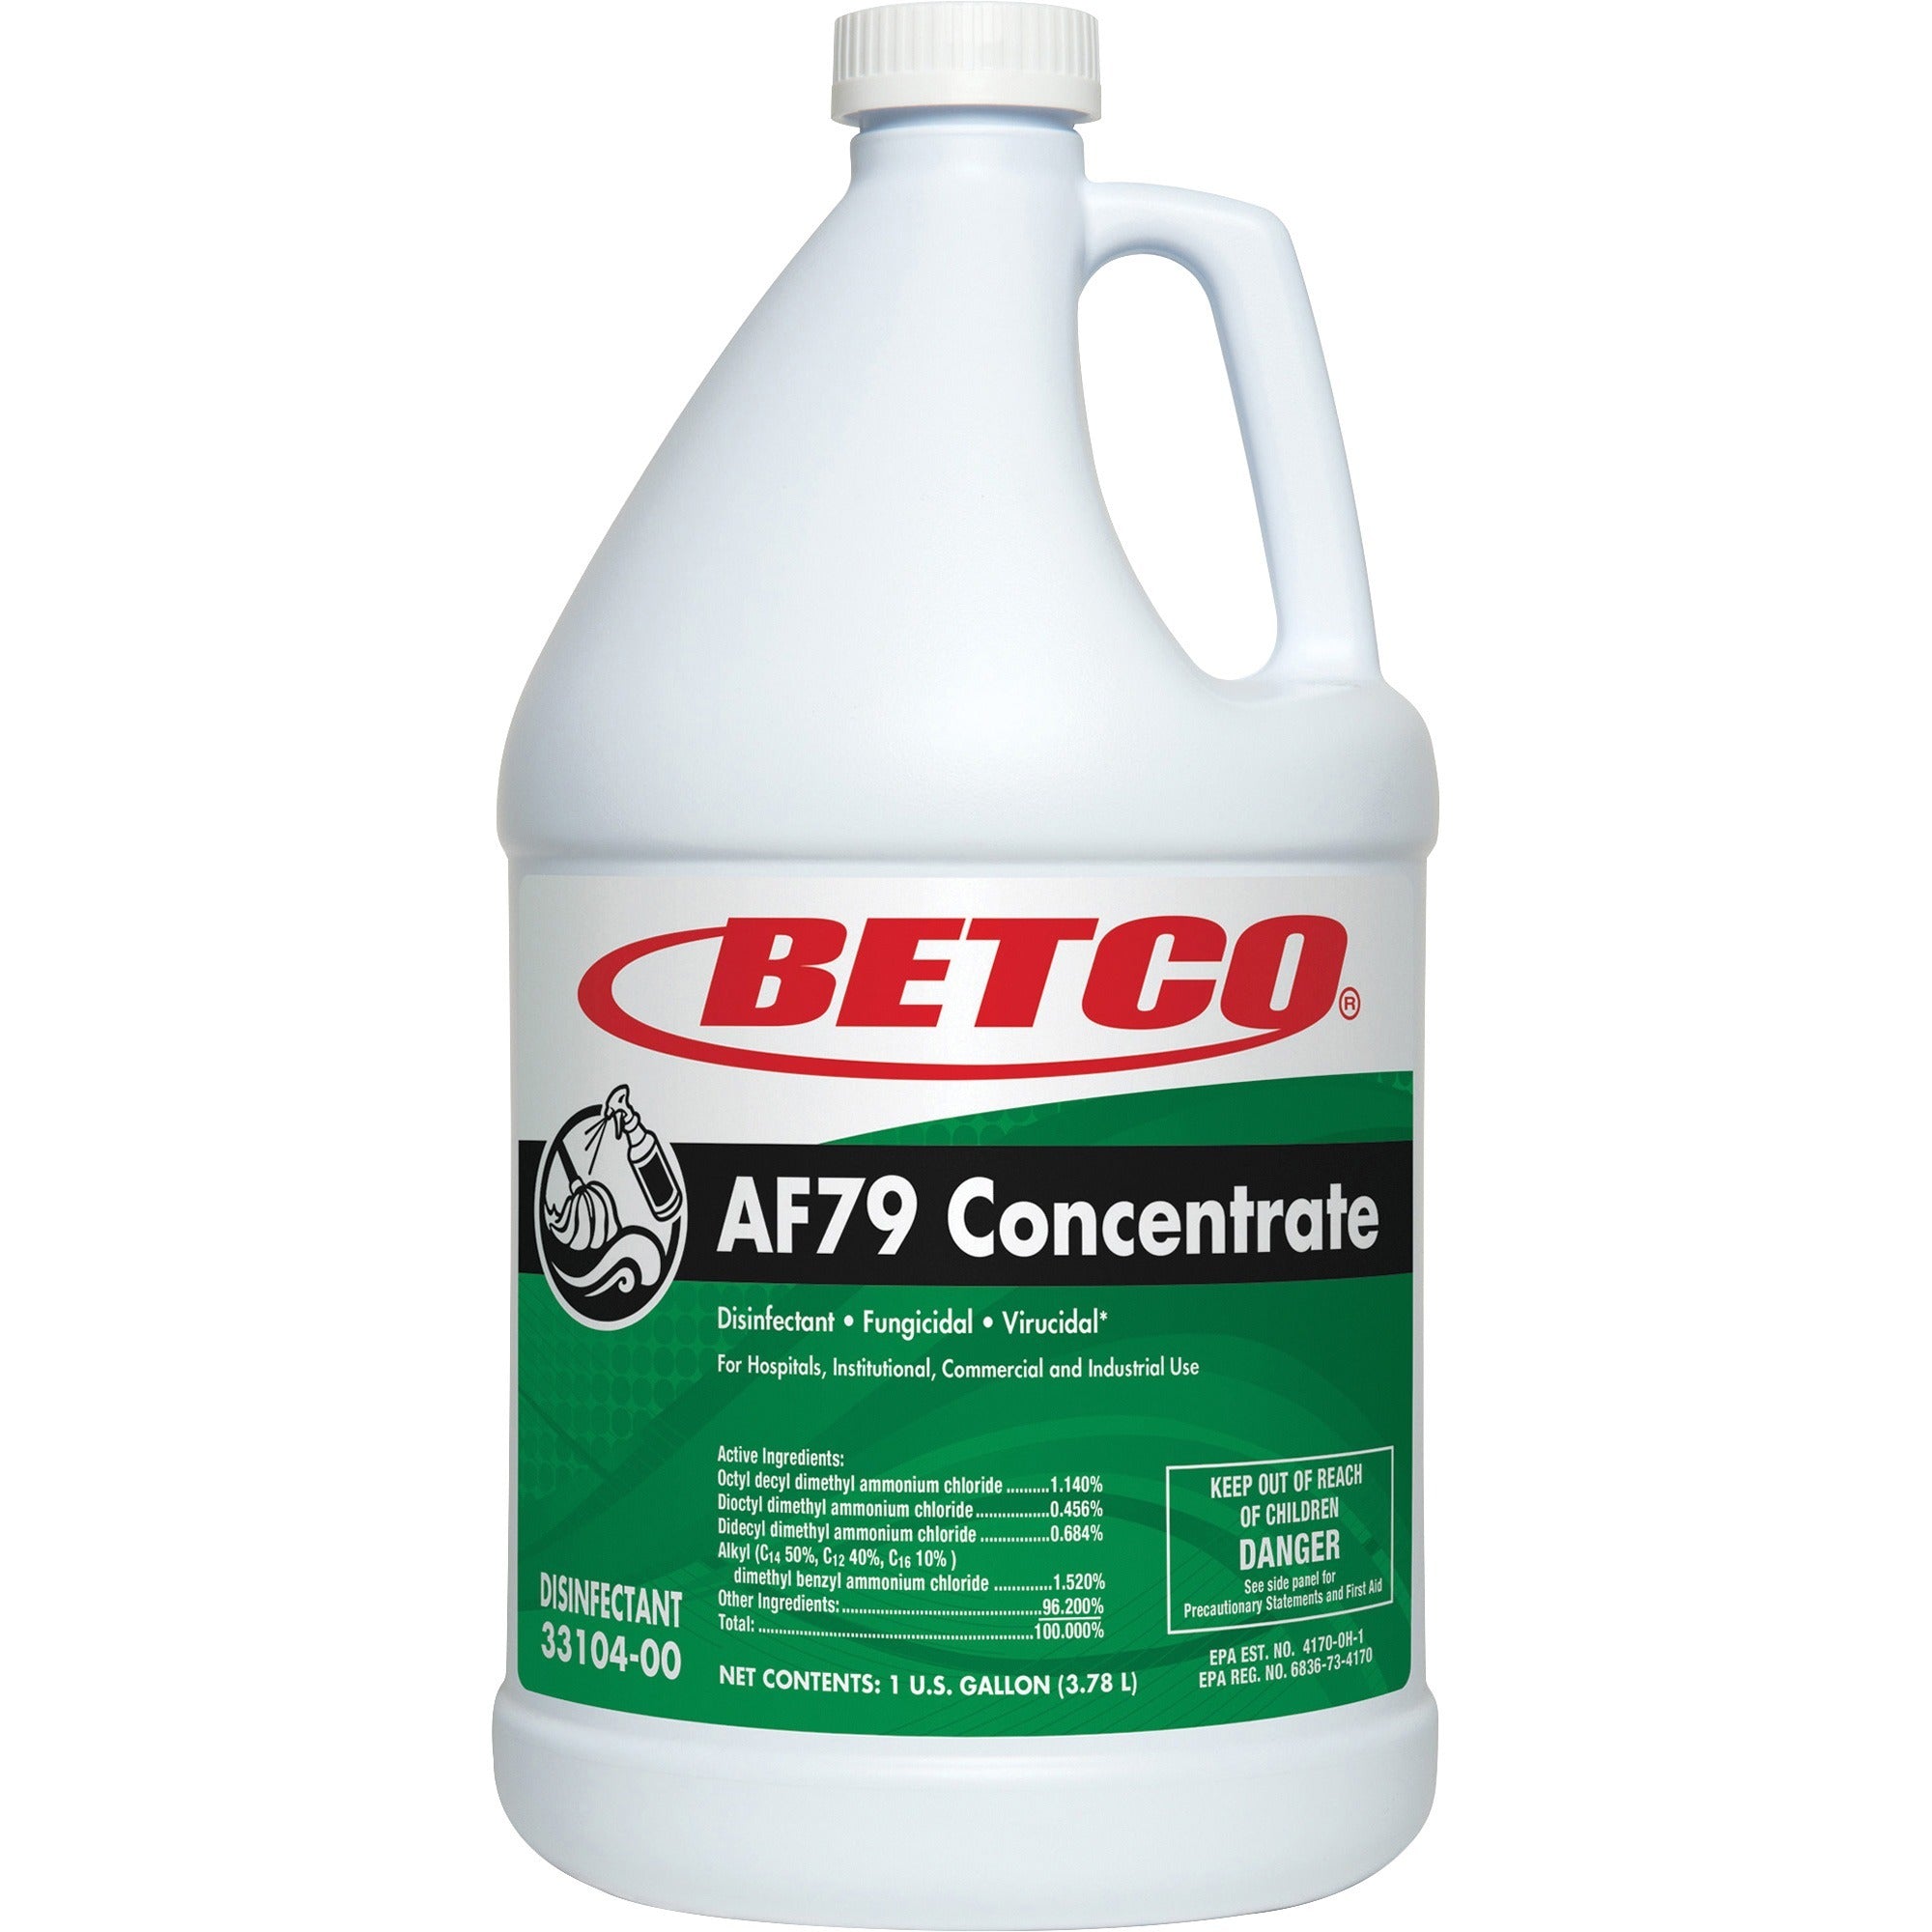 Betco AF79 Concentrate Disinfectant - Concentrate - 128 fl oz (4 quart) - Ocean Breeze Scent - 1 Each - Deodorize, Disinfectant, Non-abrasive - Green - 1